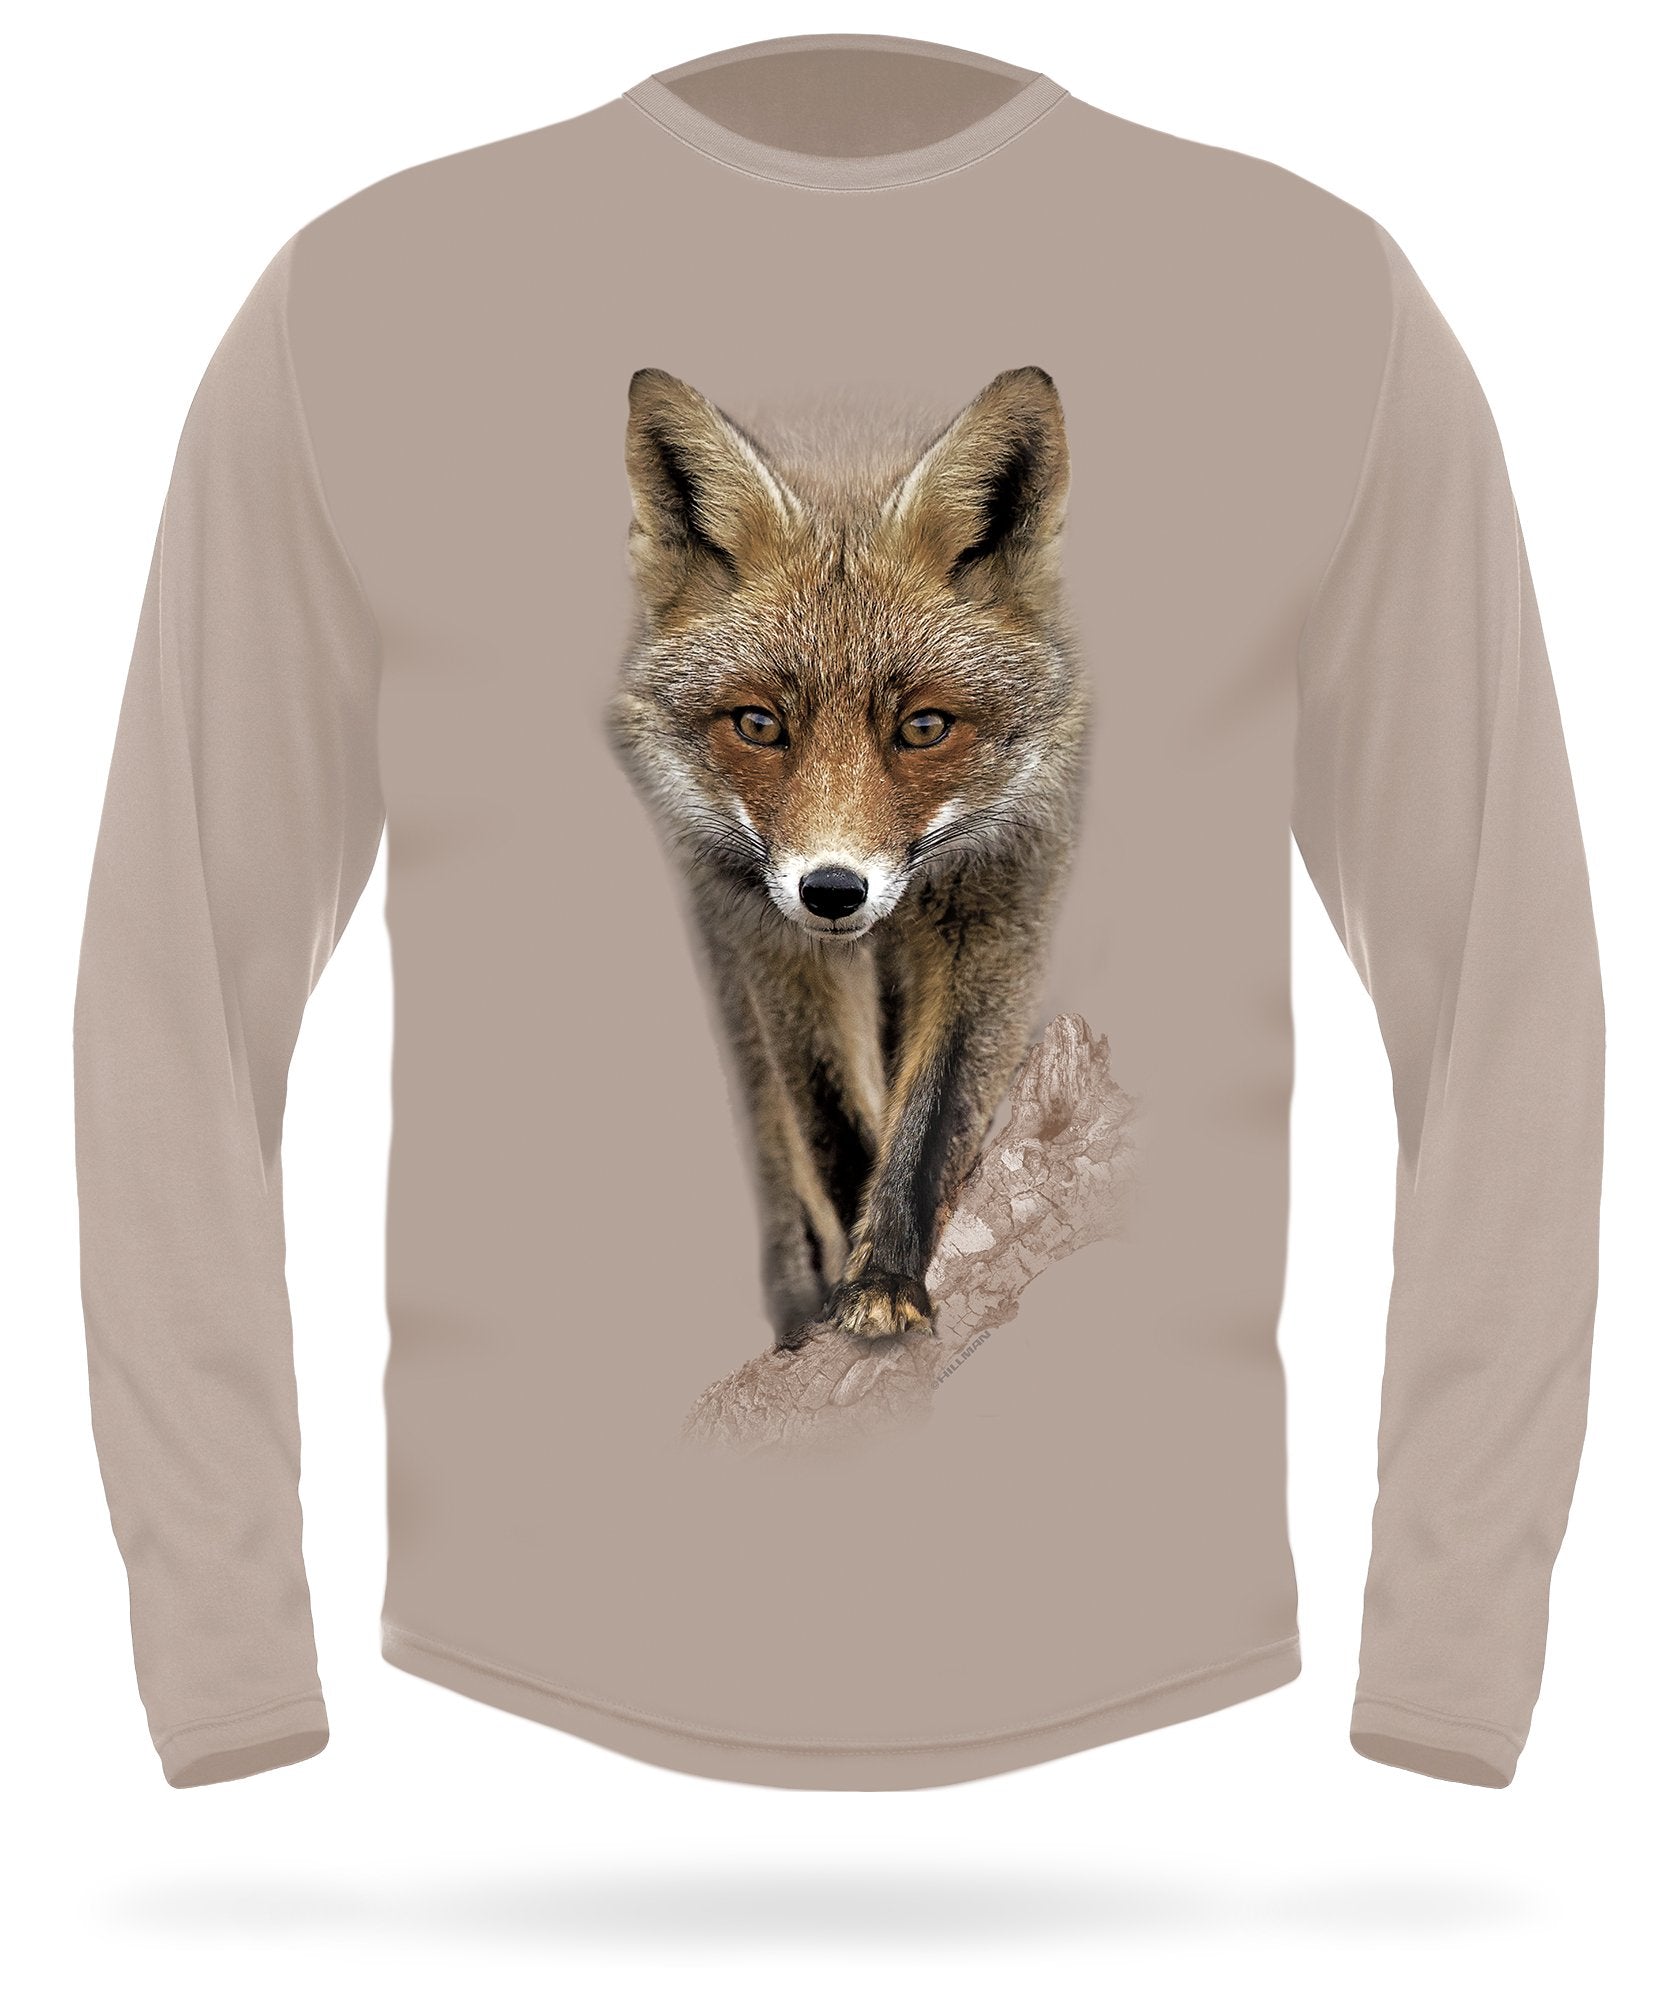 Long sleeve Red fox